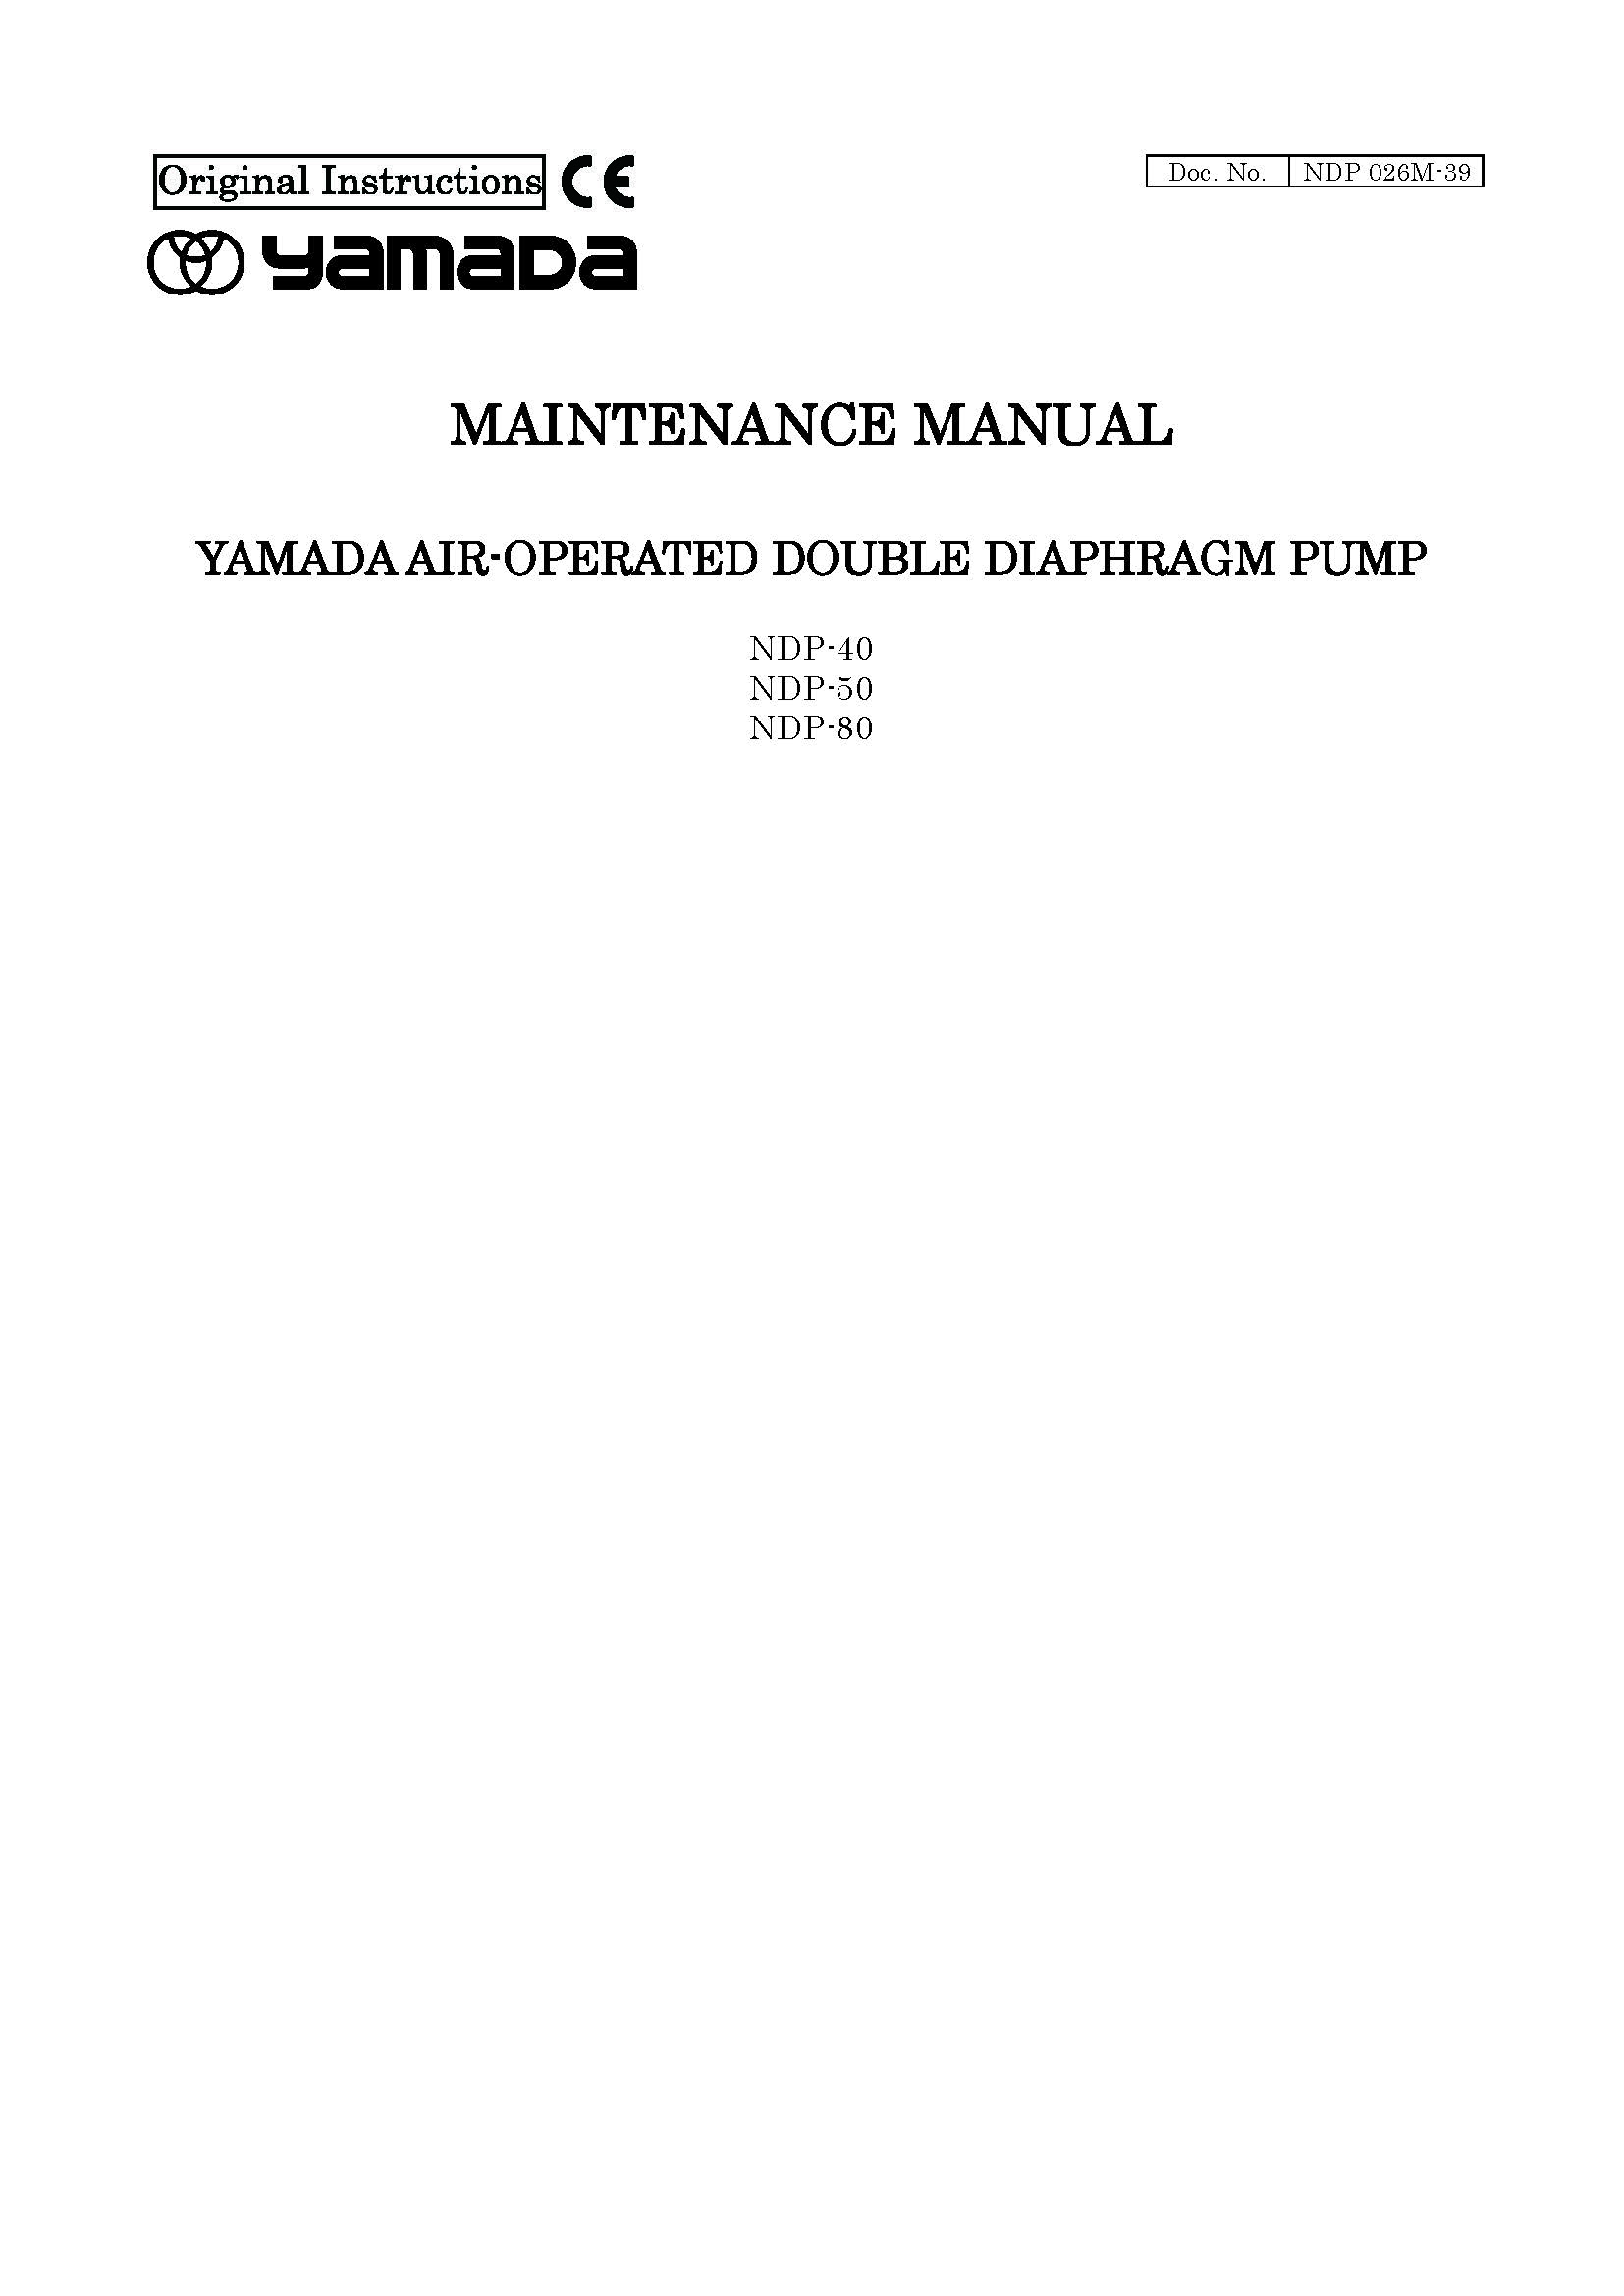 Maintenance Manual 40/50/80